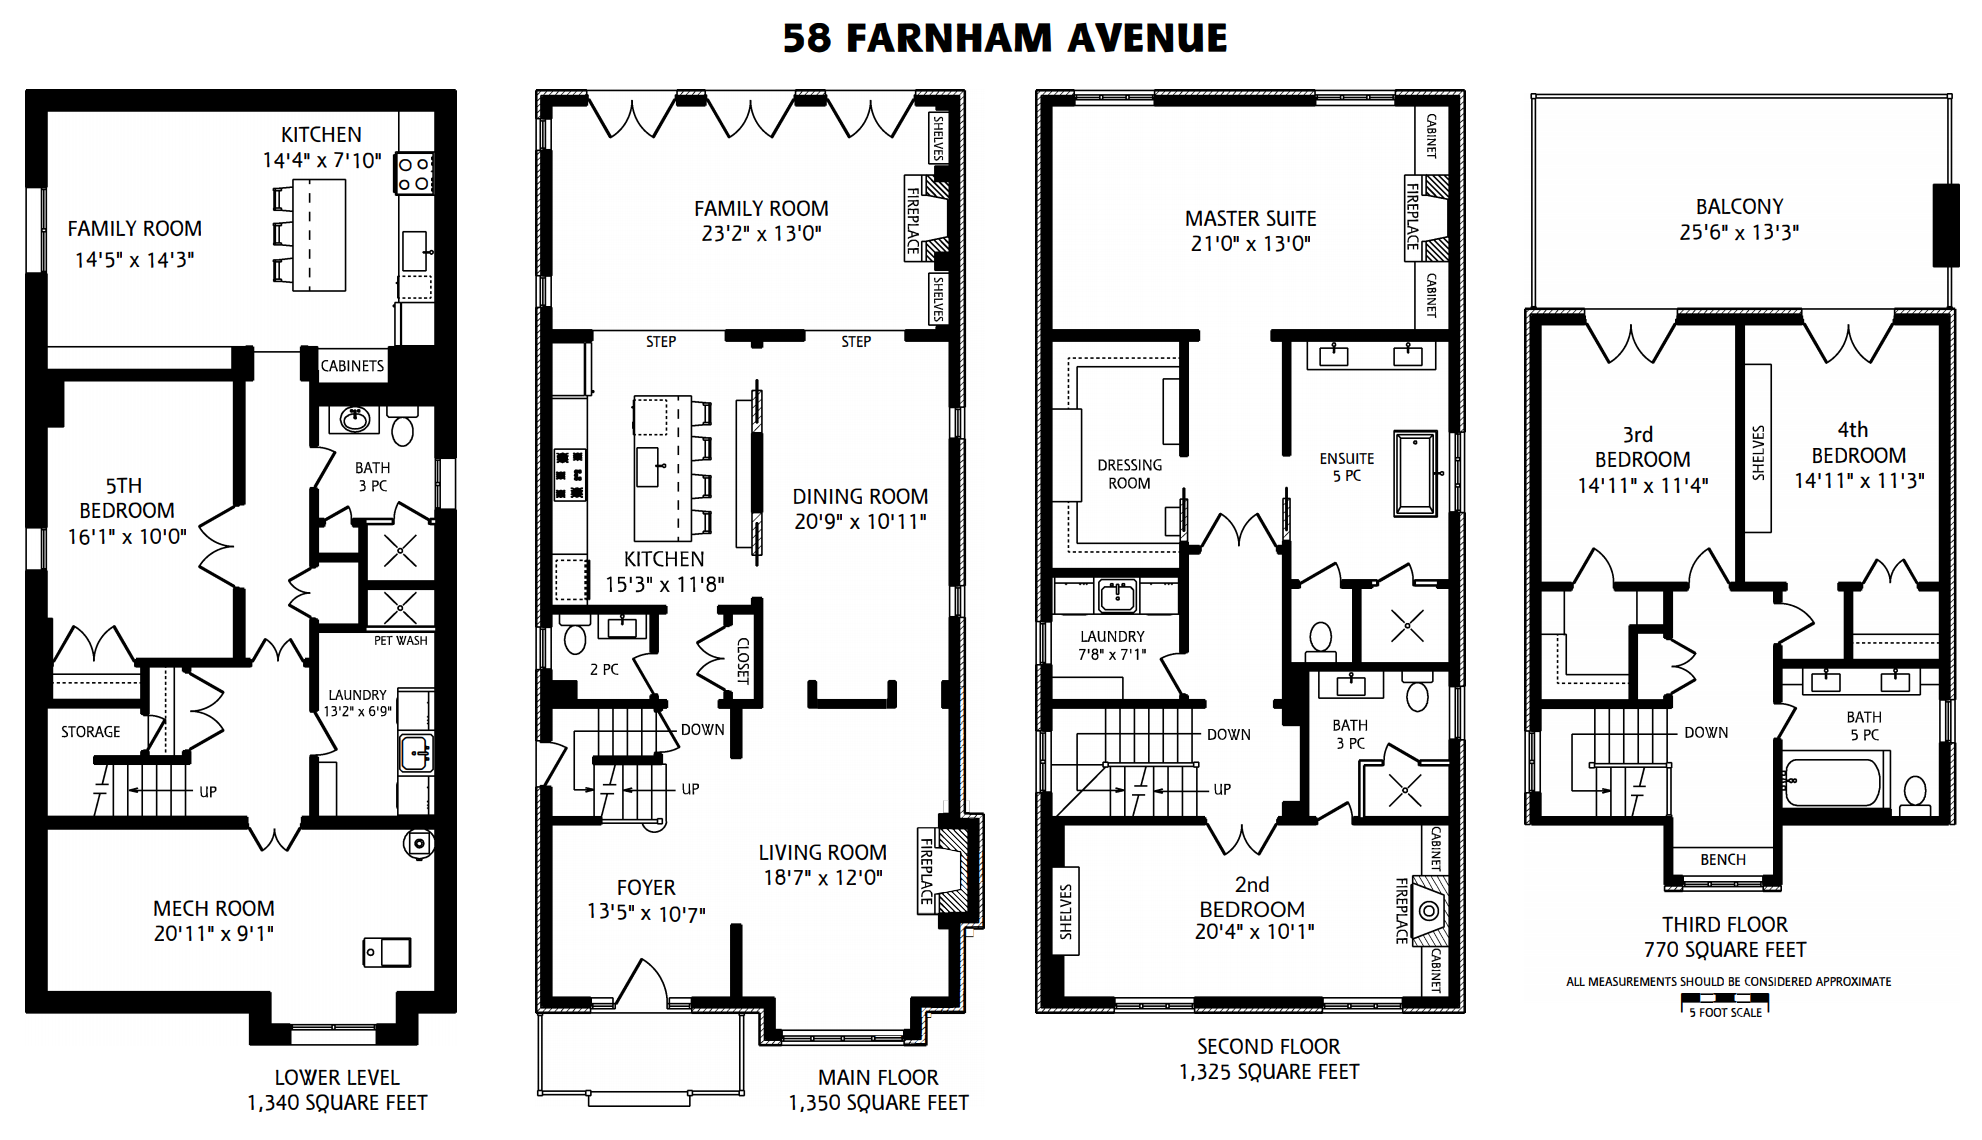 58 Farnham Ave floor plan.png